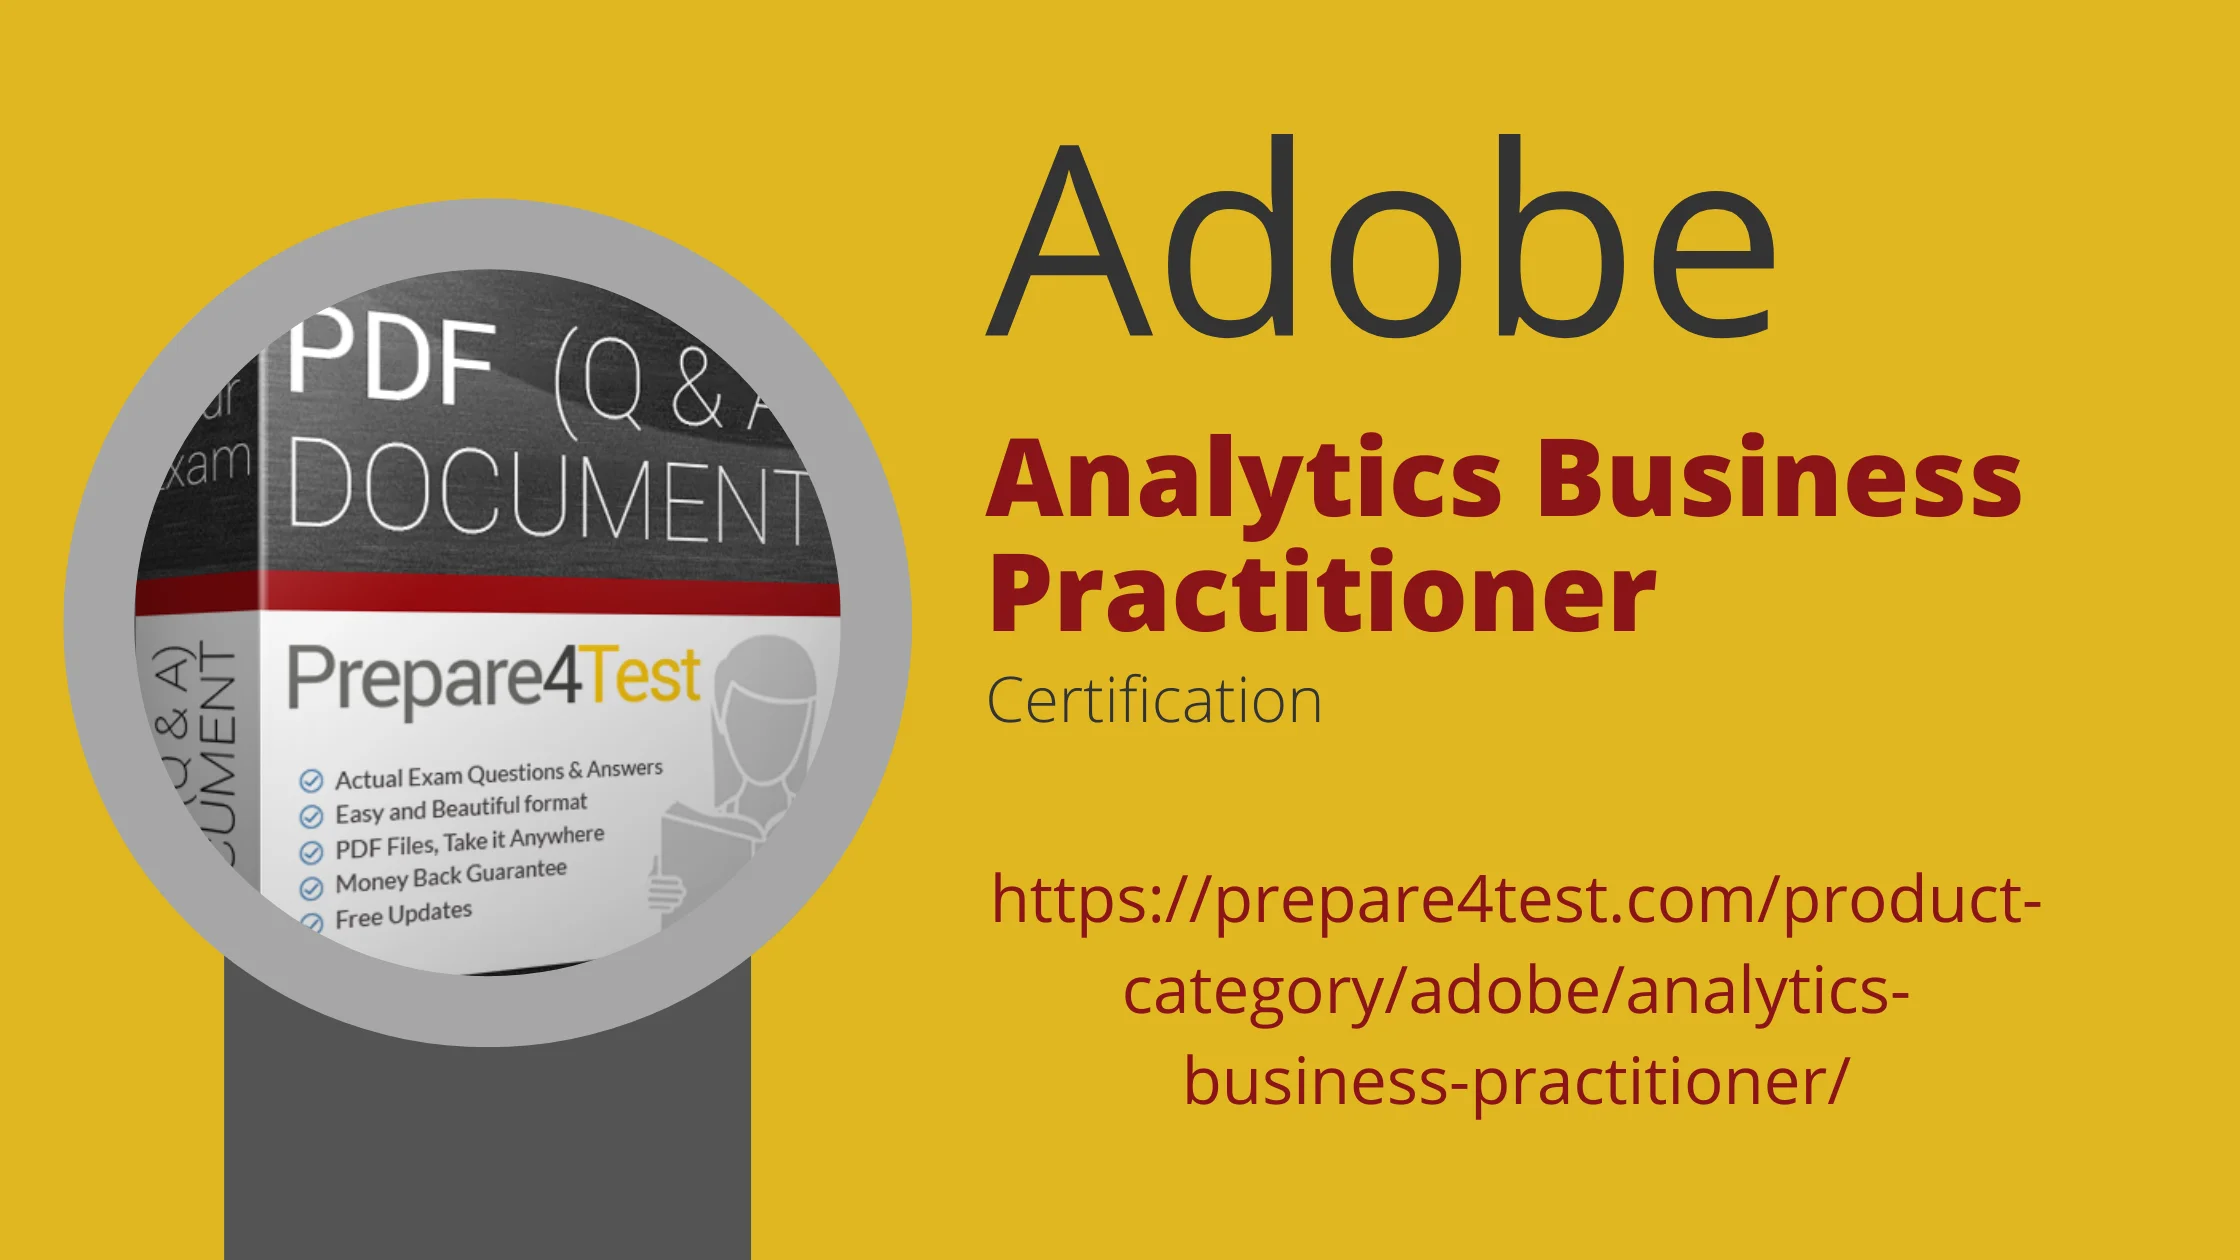 Adobe Analytics Business Practitioner Certification